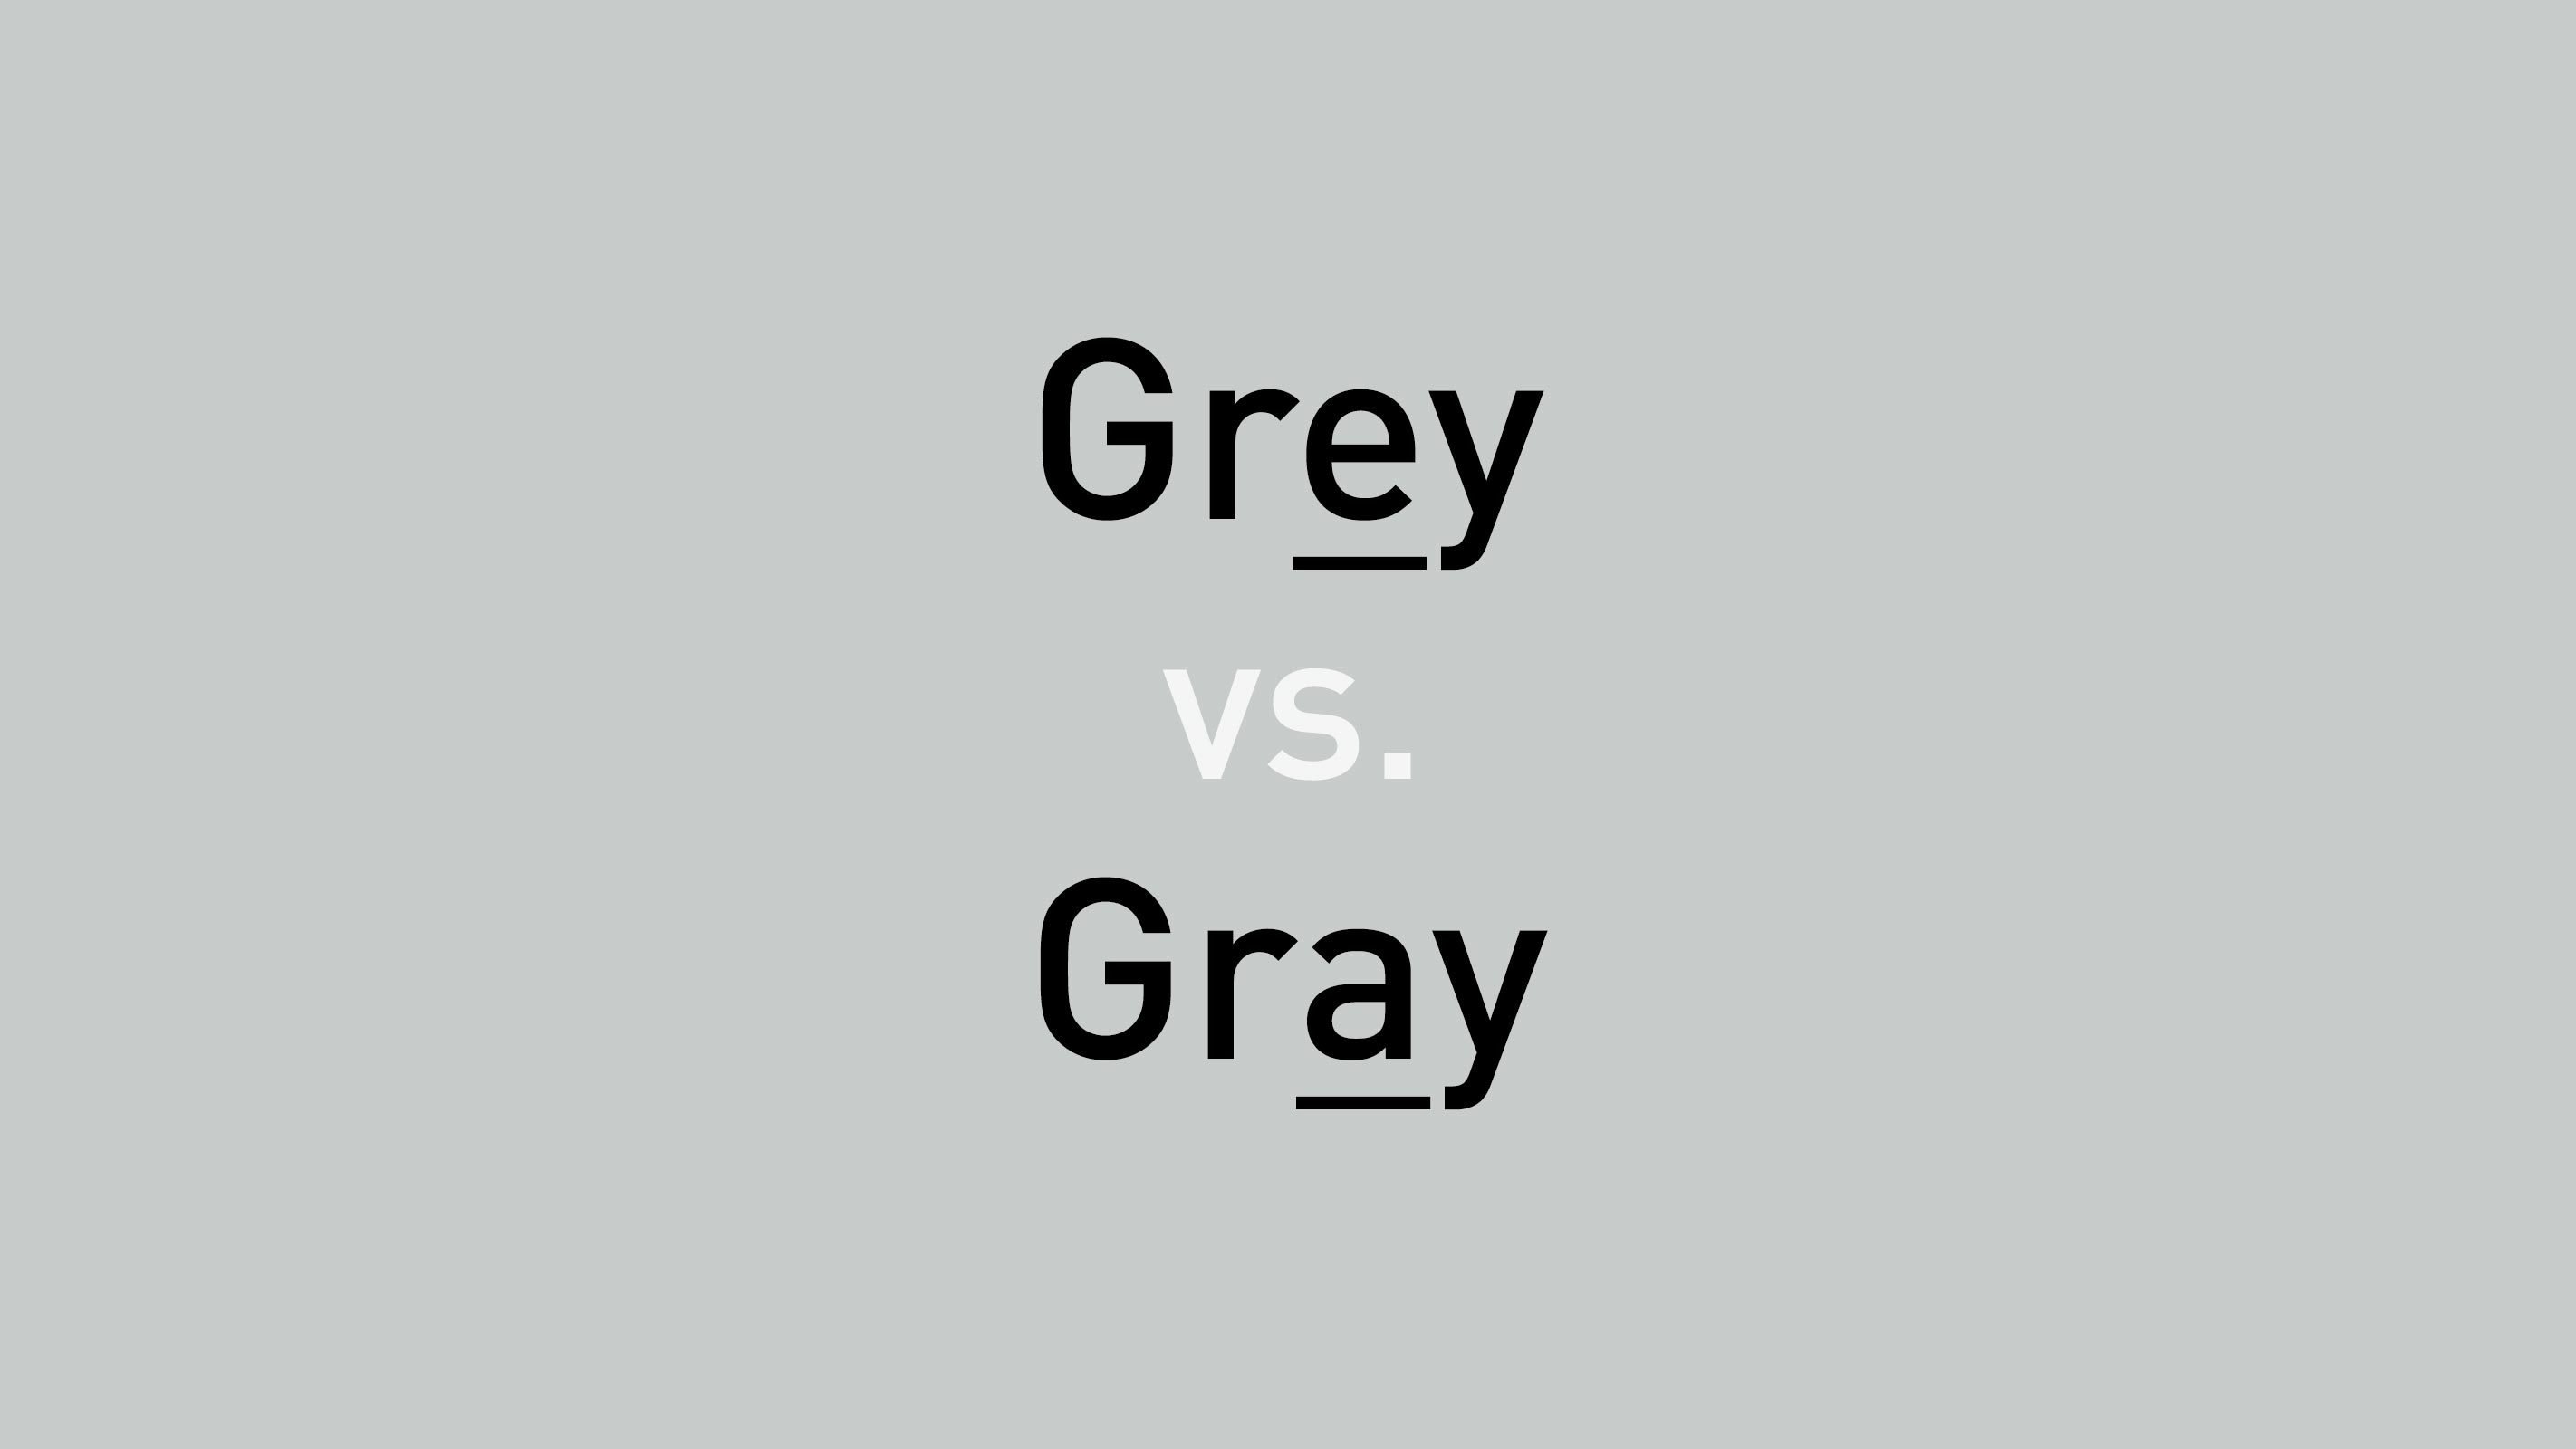 https://www.rd.com/wp-content/uploads/2020/05/grey-vs-gray.jpg